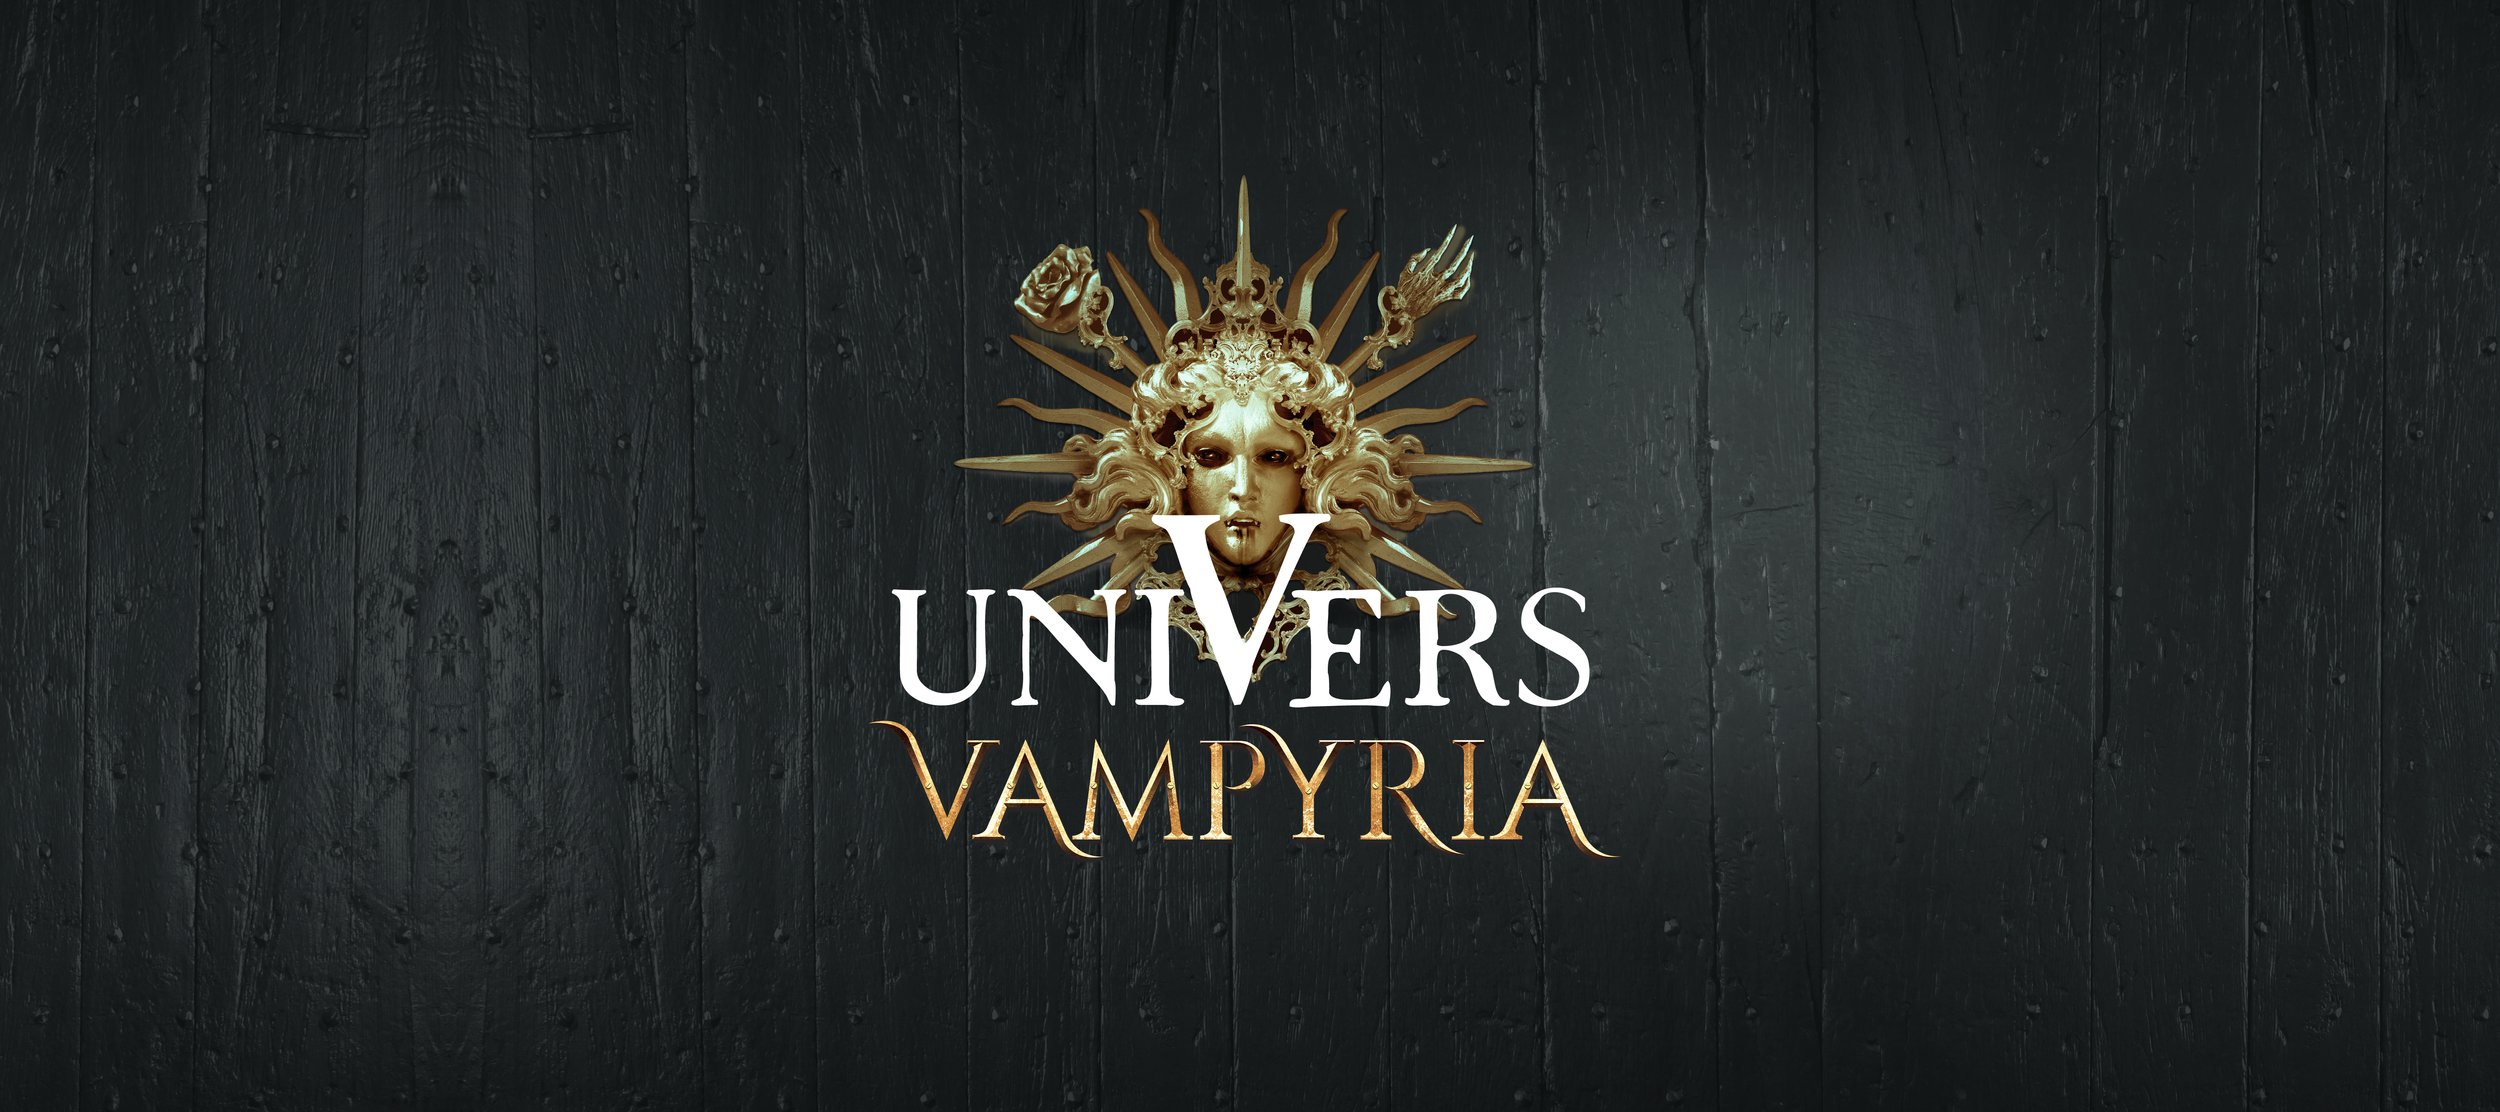 univers vampyria banner.jpg